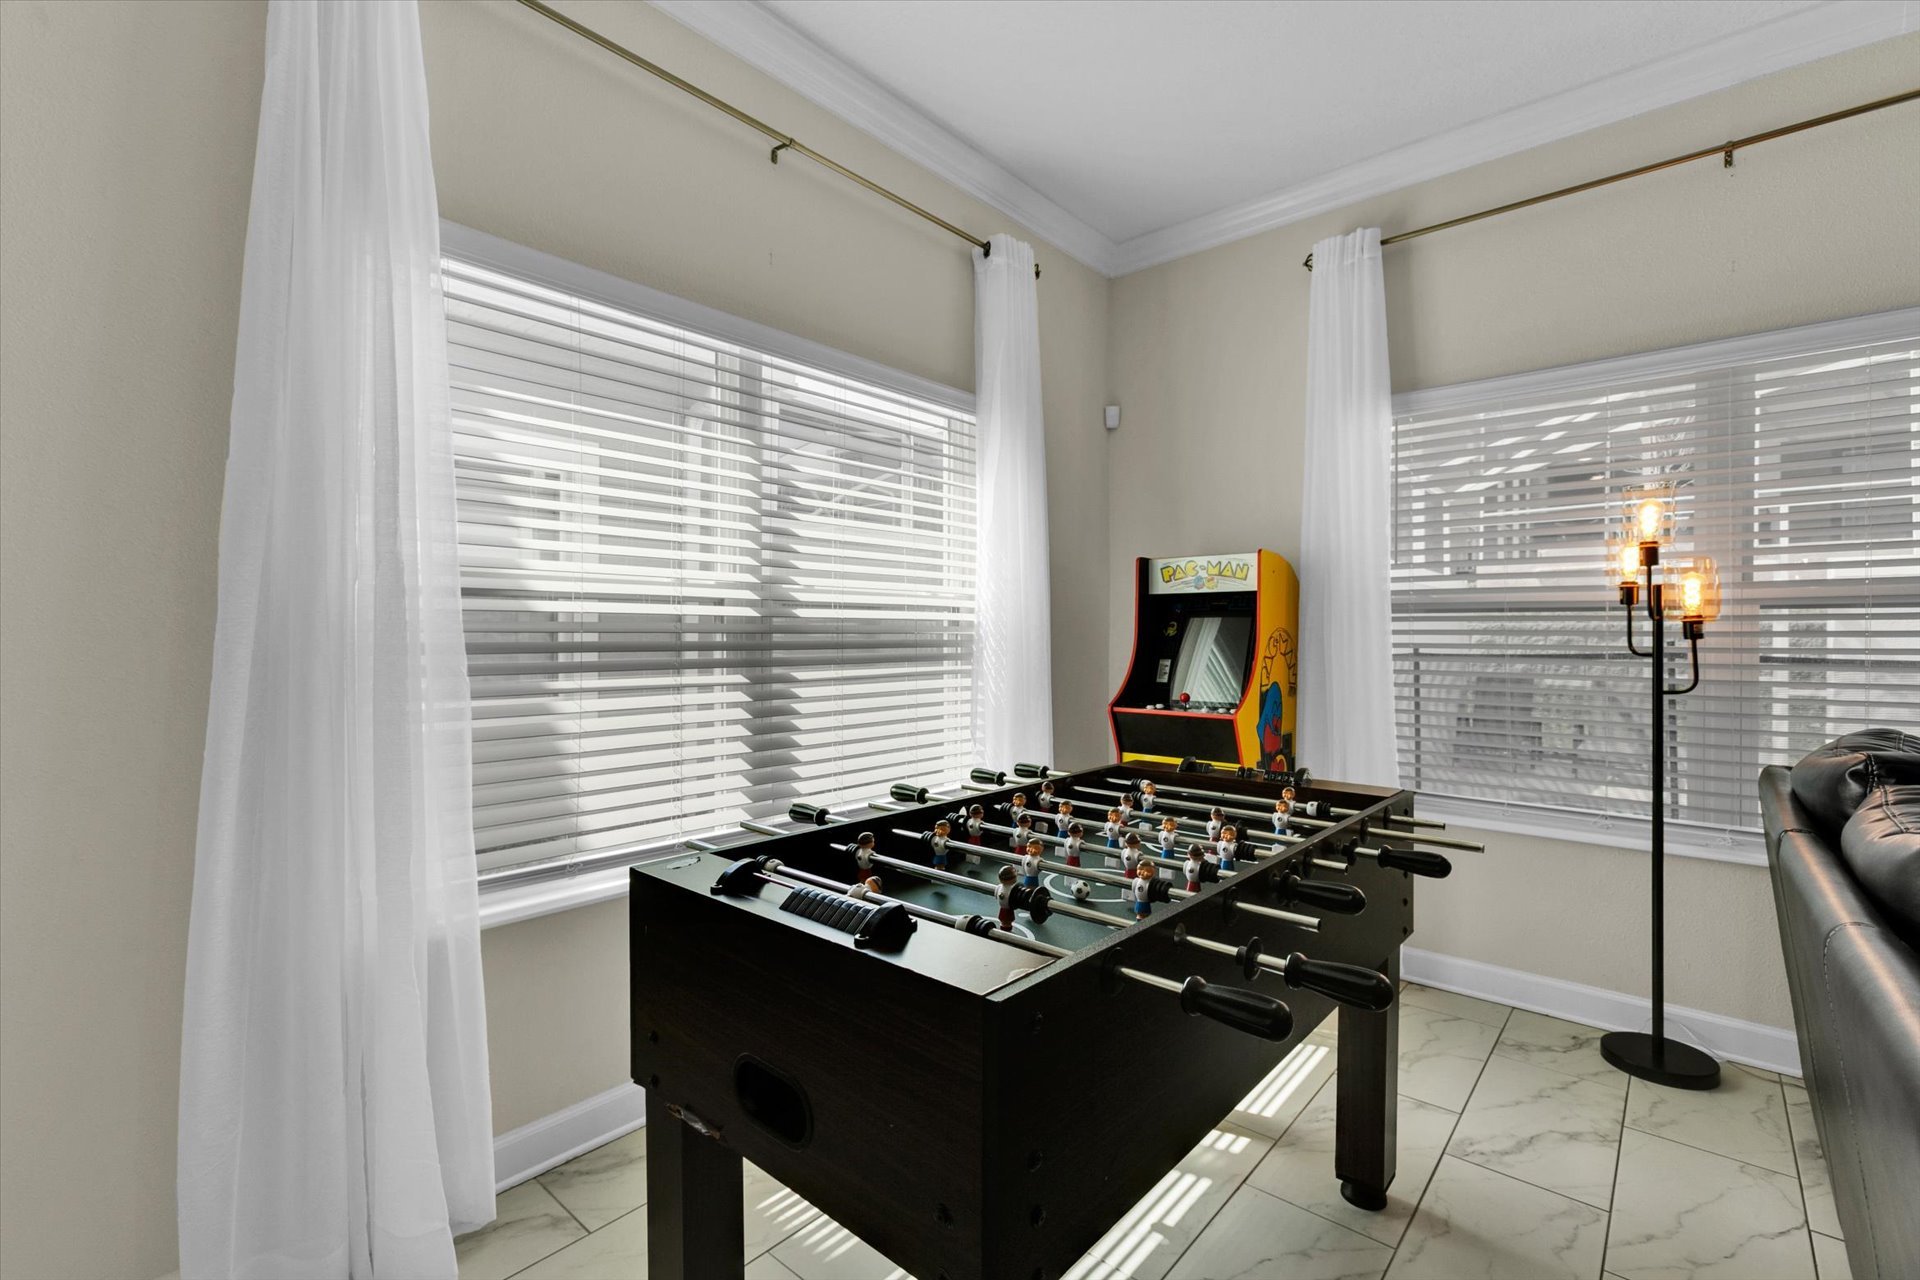 Game Area in Living Room
Foosball
Pac-Man Video Arcade